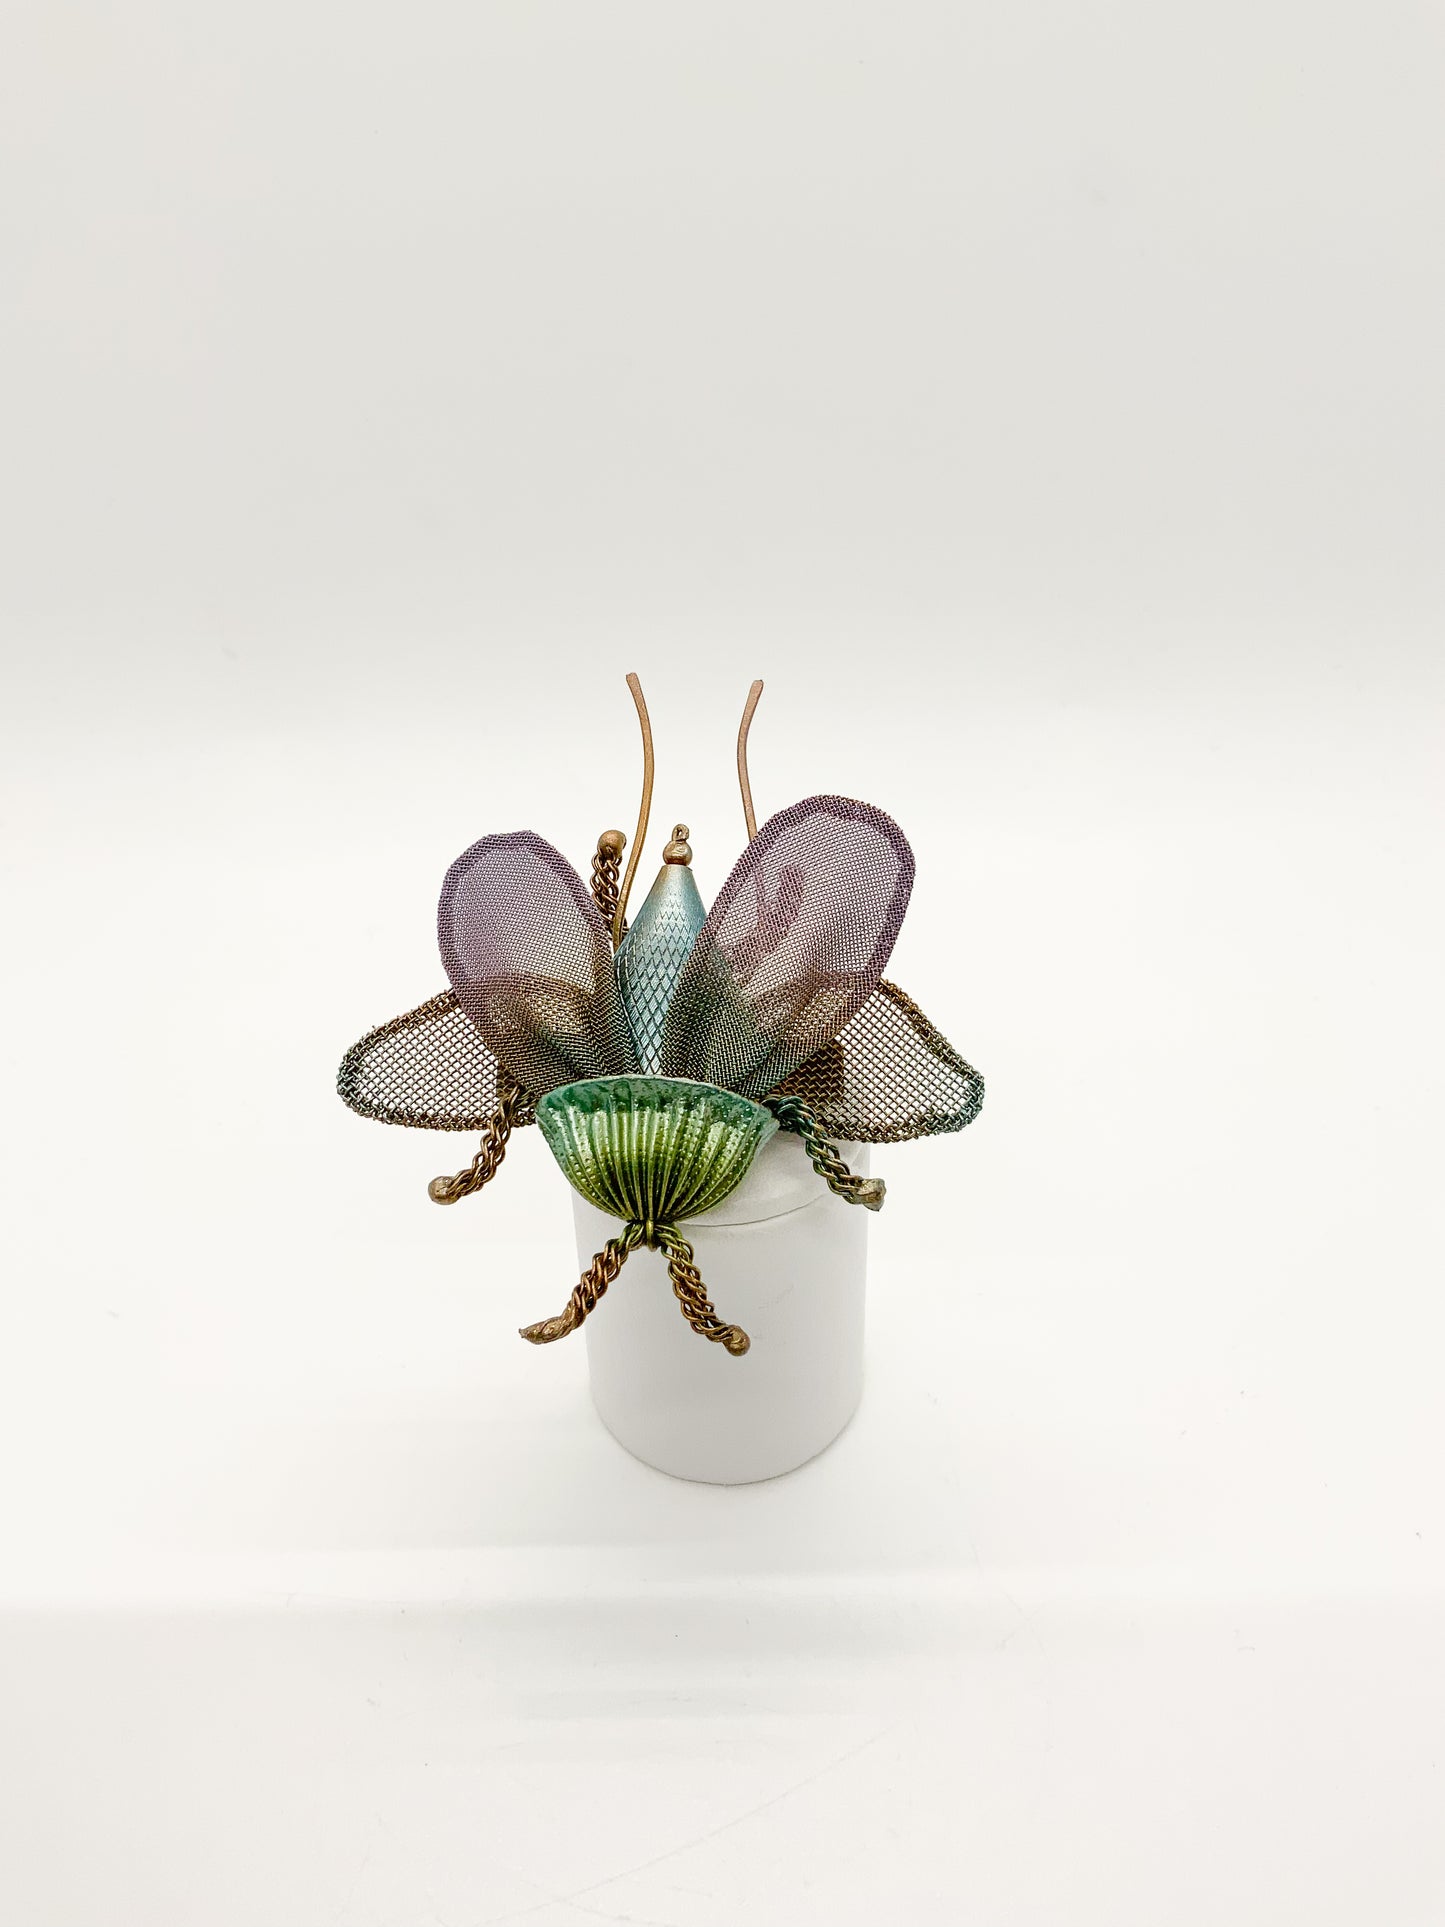 Jewel Beetle with Wings